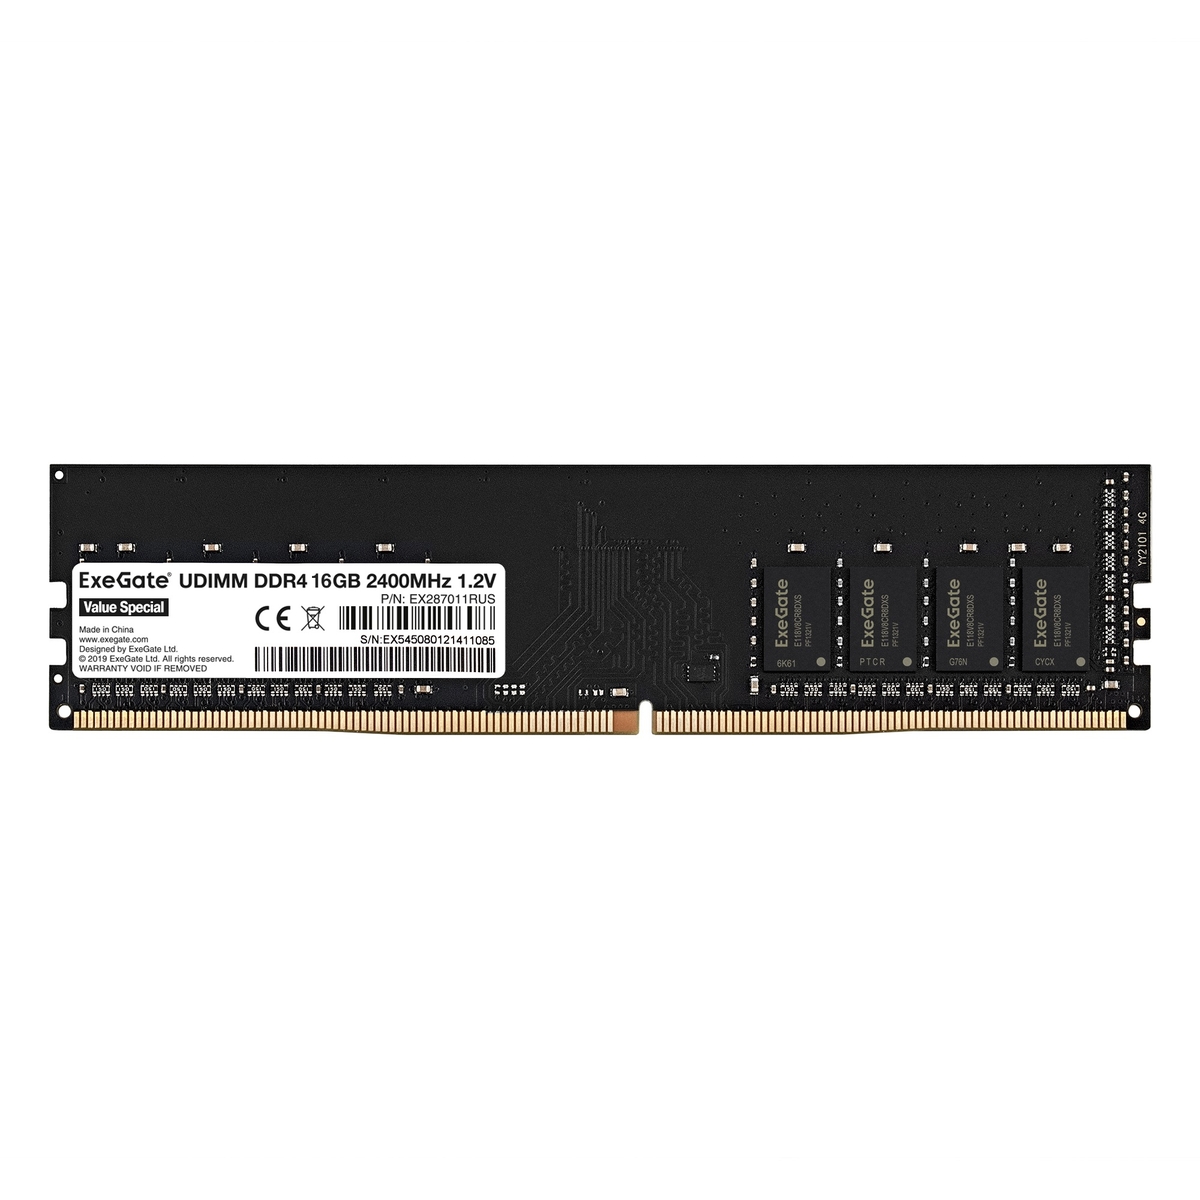 Память оперативная DDR4 ExeGate Value Special 16Gb 2400MHz (EX287011RUS) цена и фото